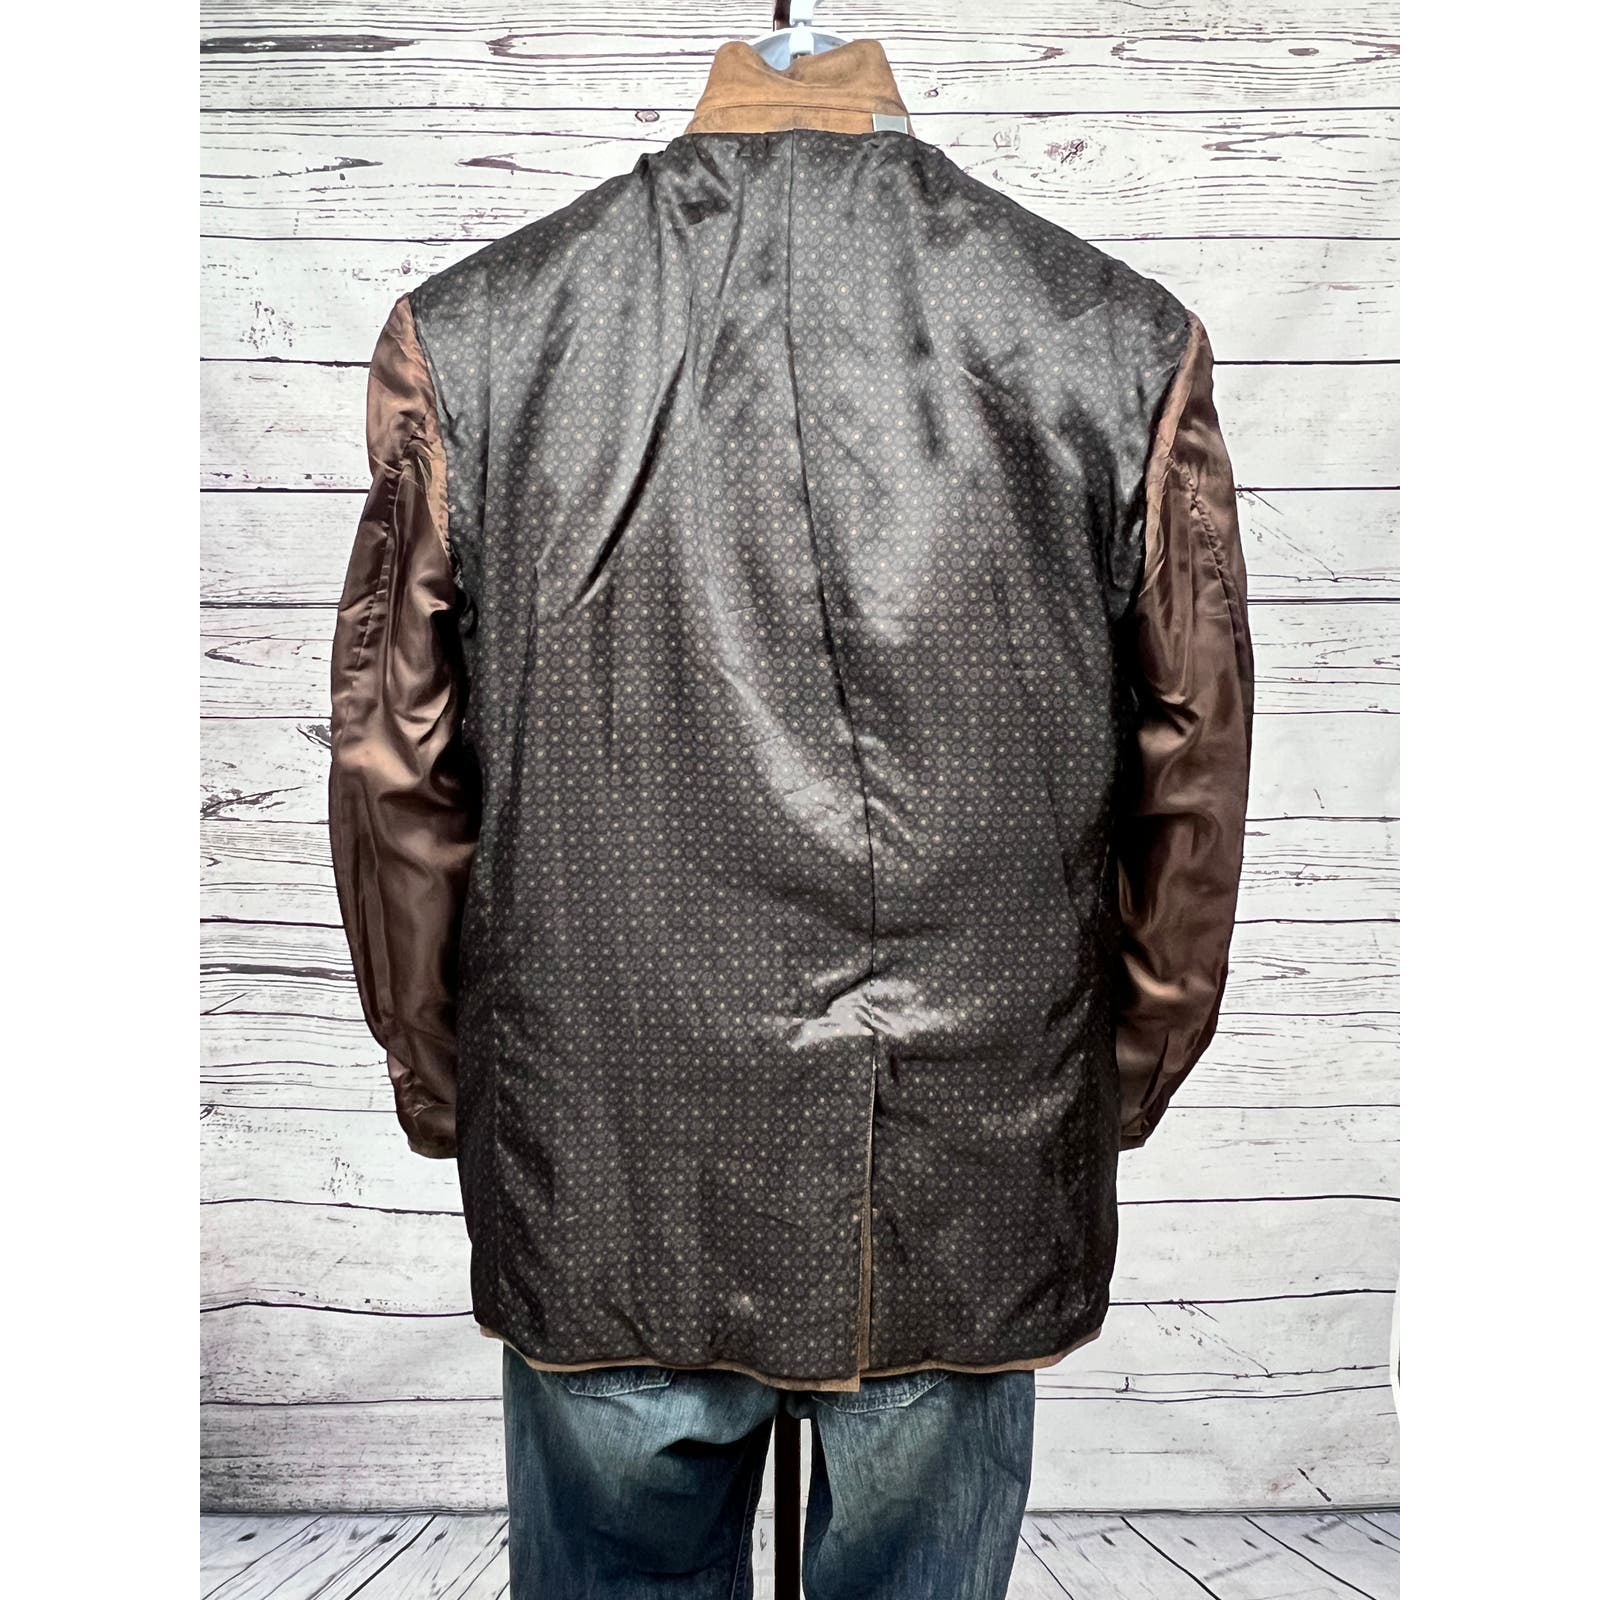 Michael Kors Men's Sport Coat 40R Distressed Faux Leather Blazer Jacket Brown